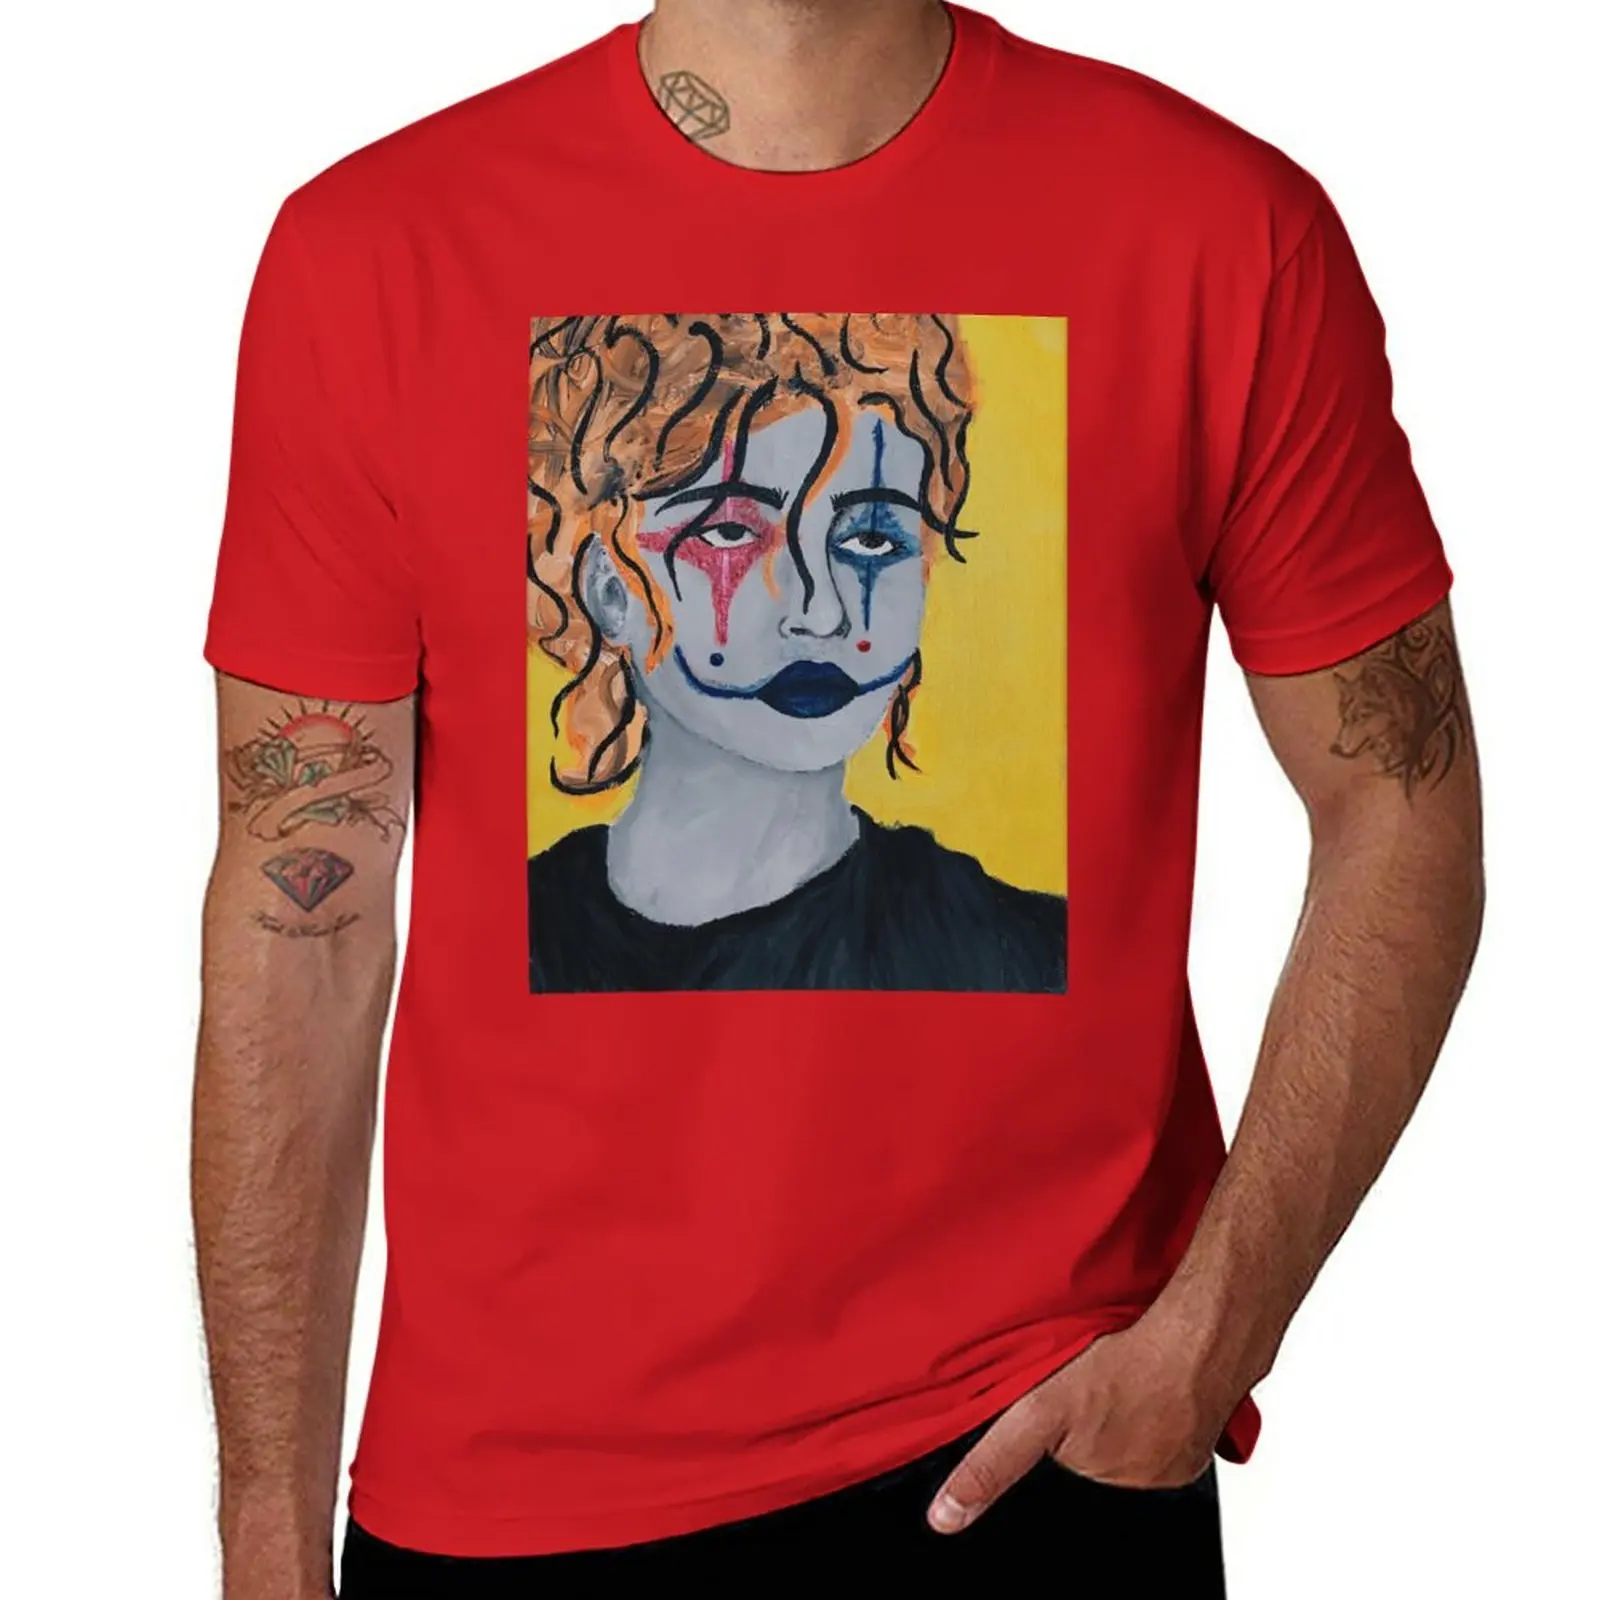 

New Clown Self Portrait T-Shirt shirts graphic tees customized t shirts black t shirts for men